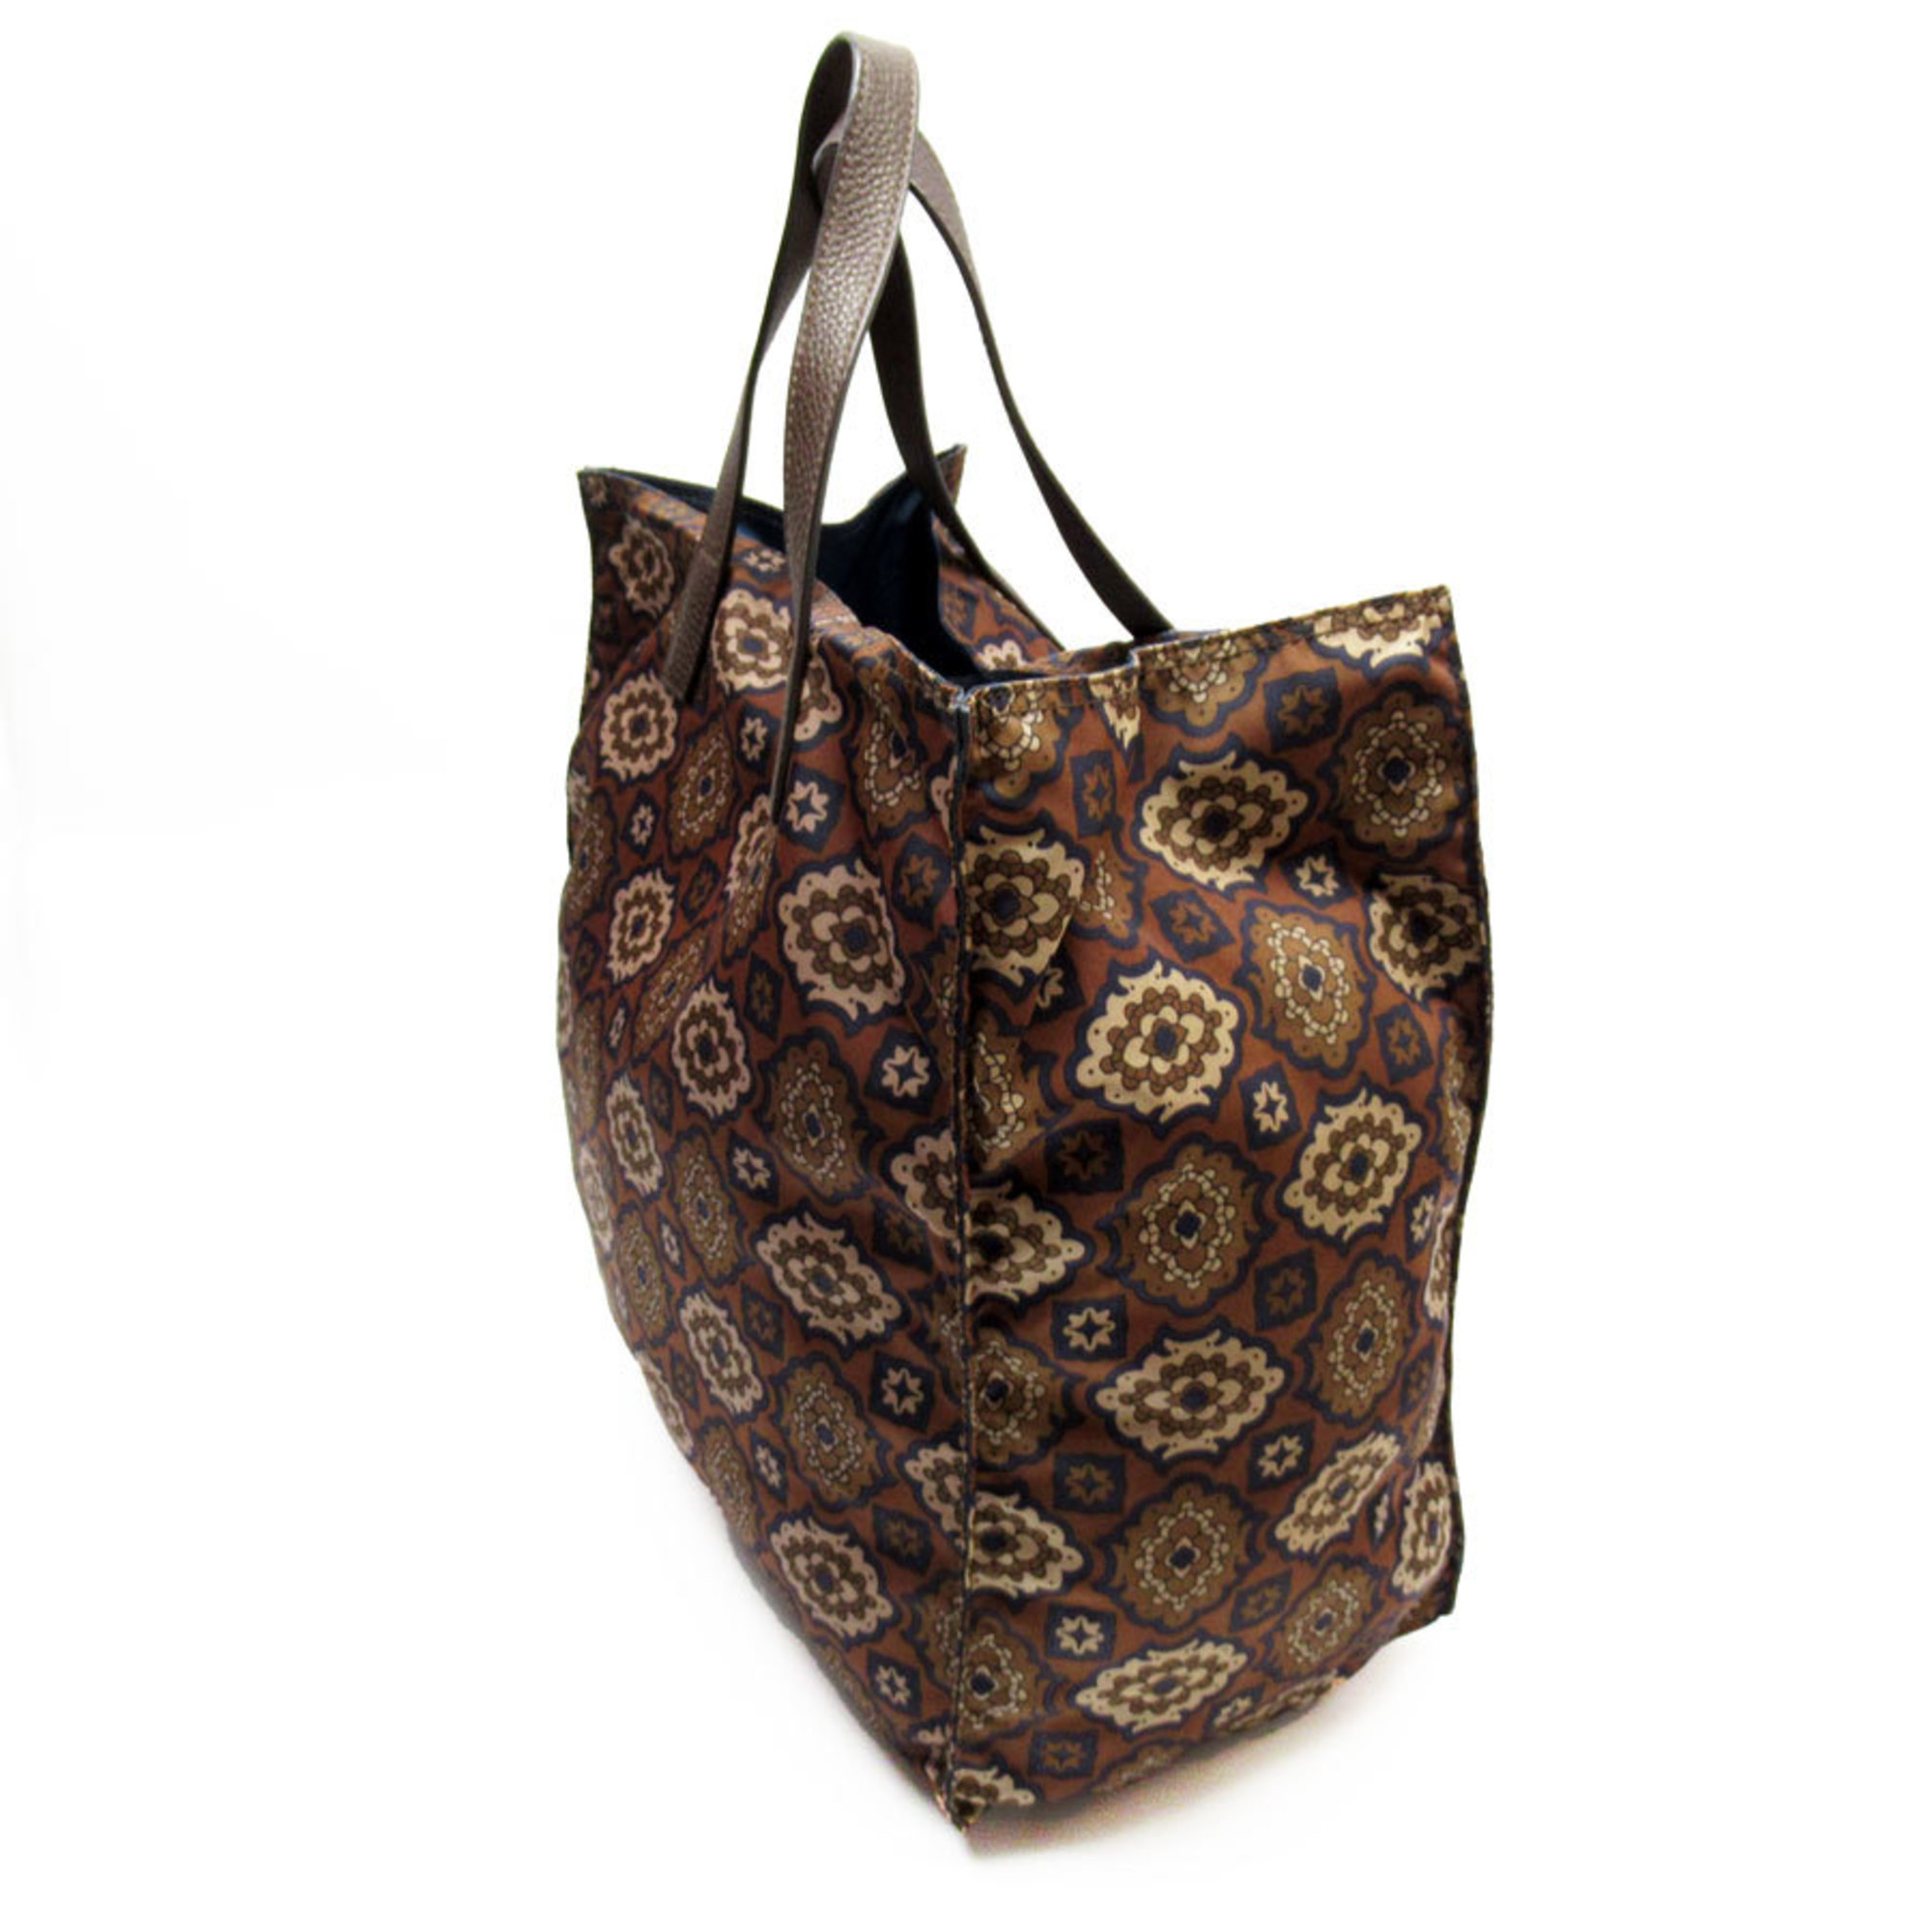 PRADA handbag tote bag nylon/leather brown/multicolor women's w0128g